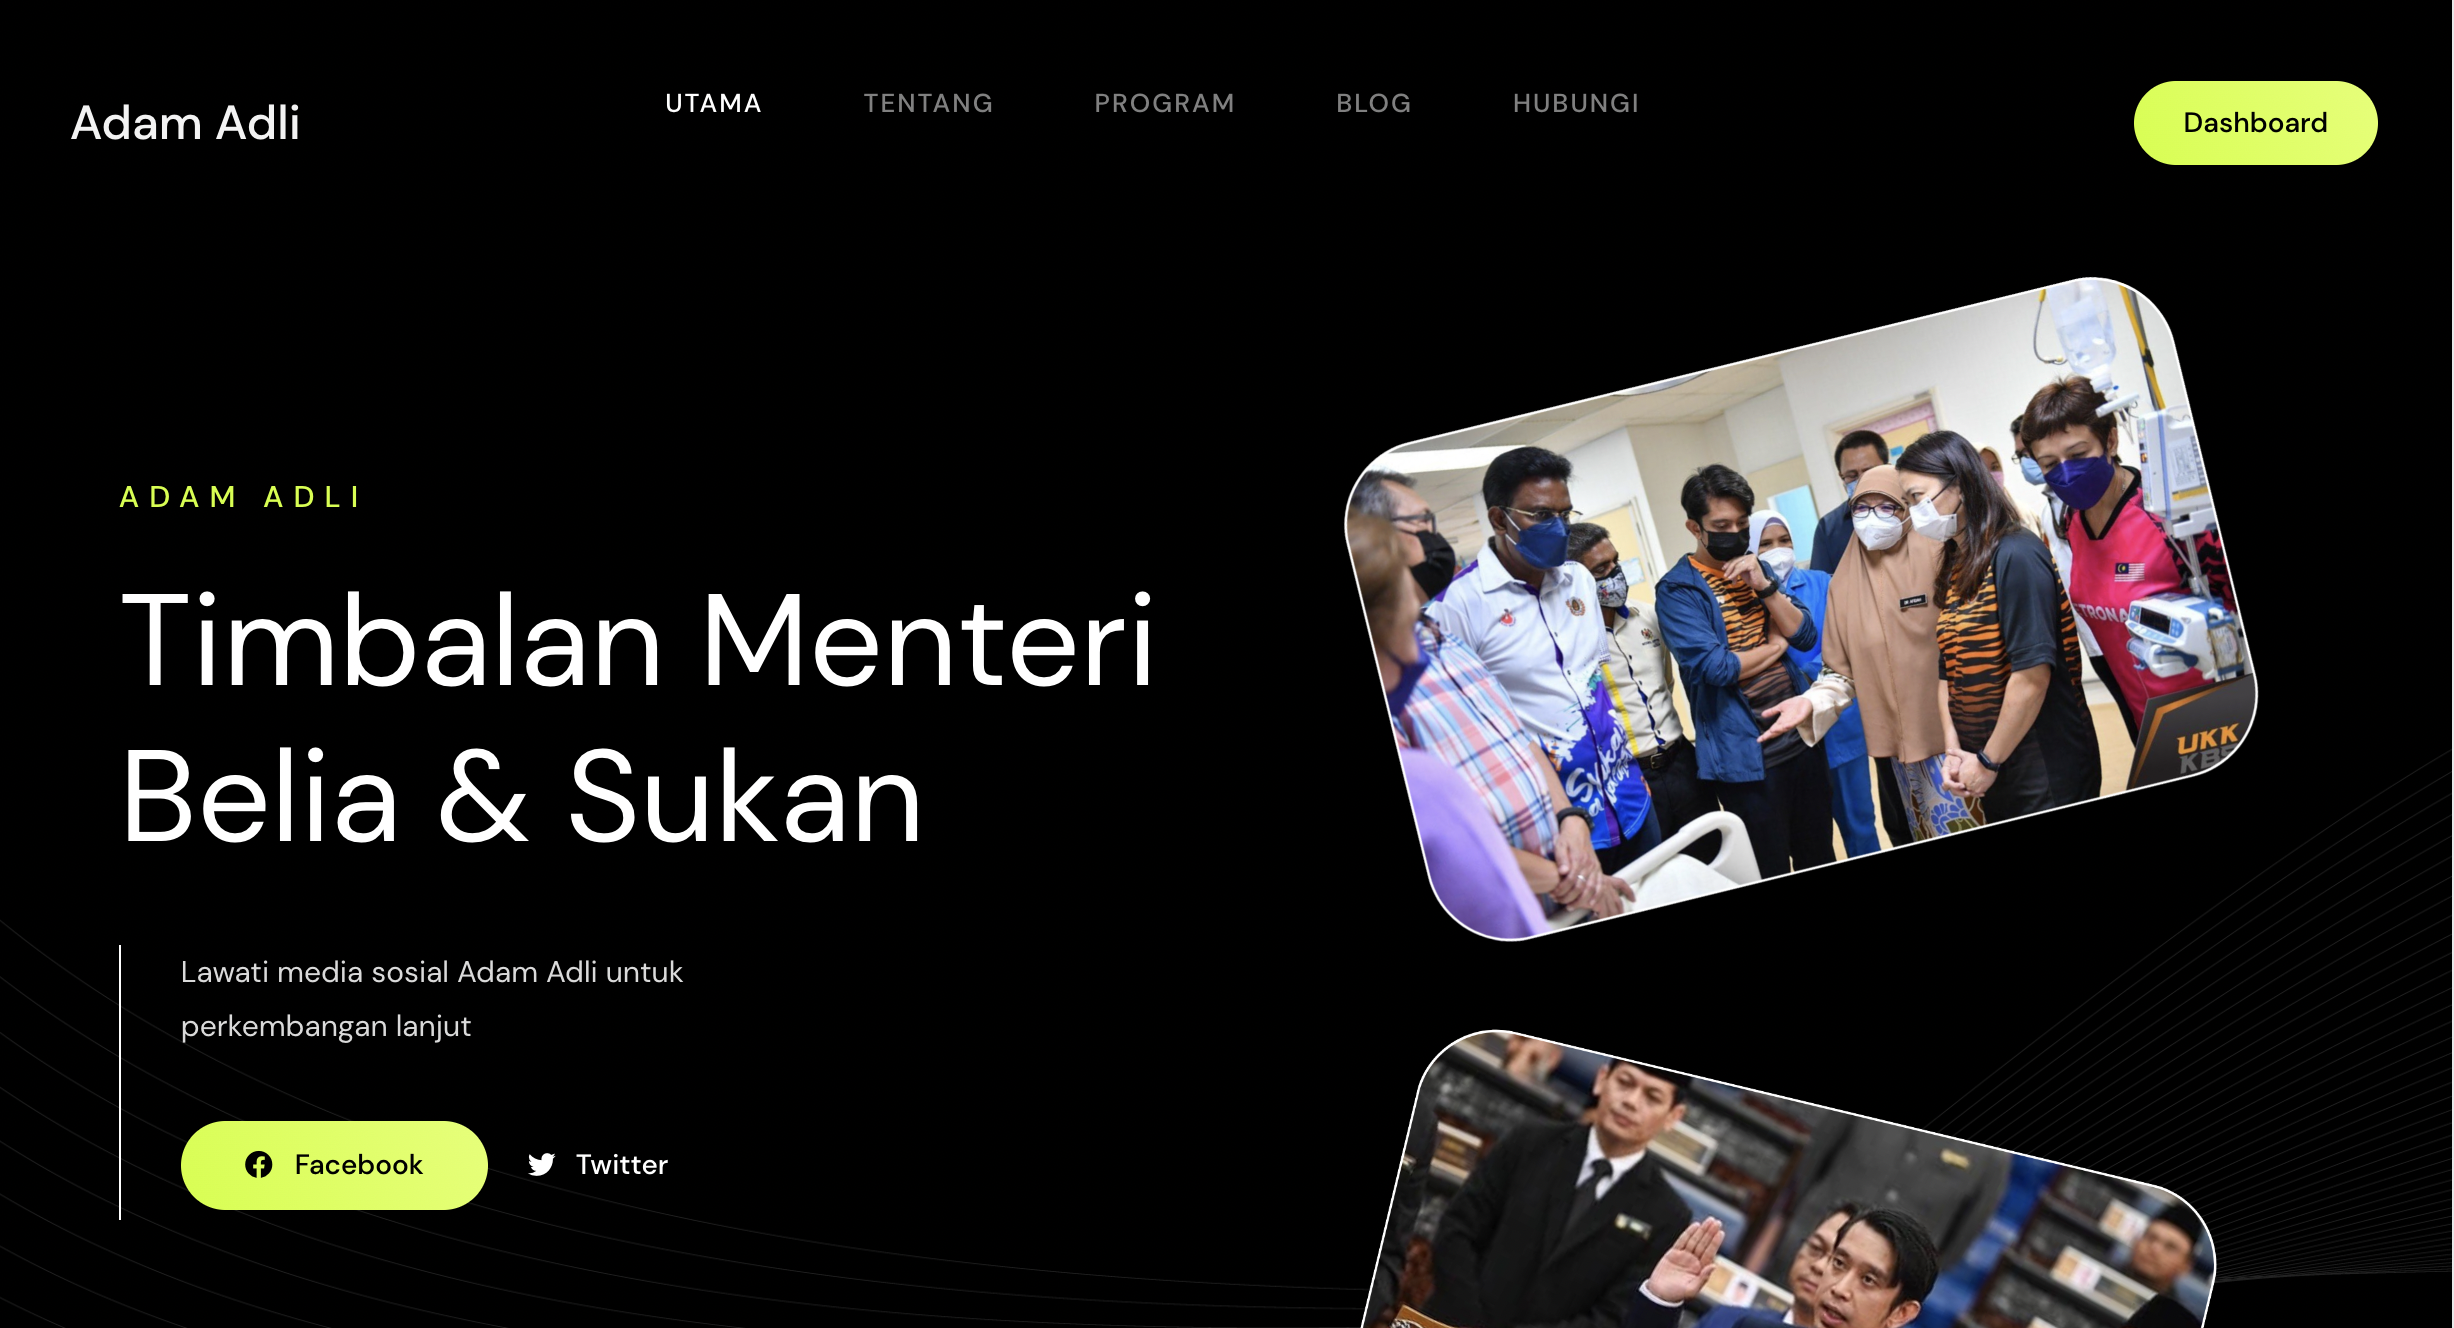 Deputy Minister website